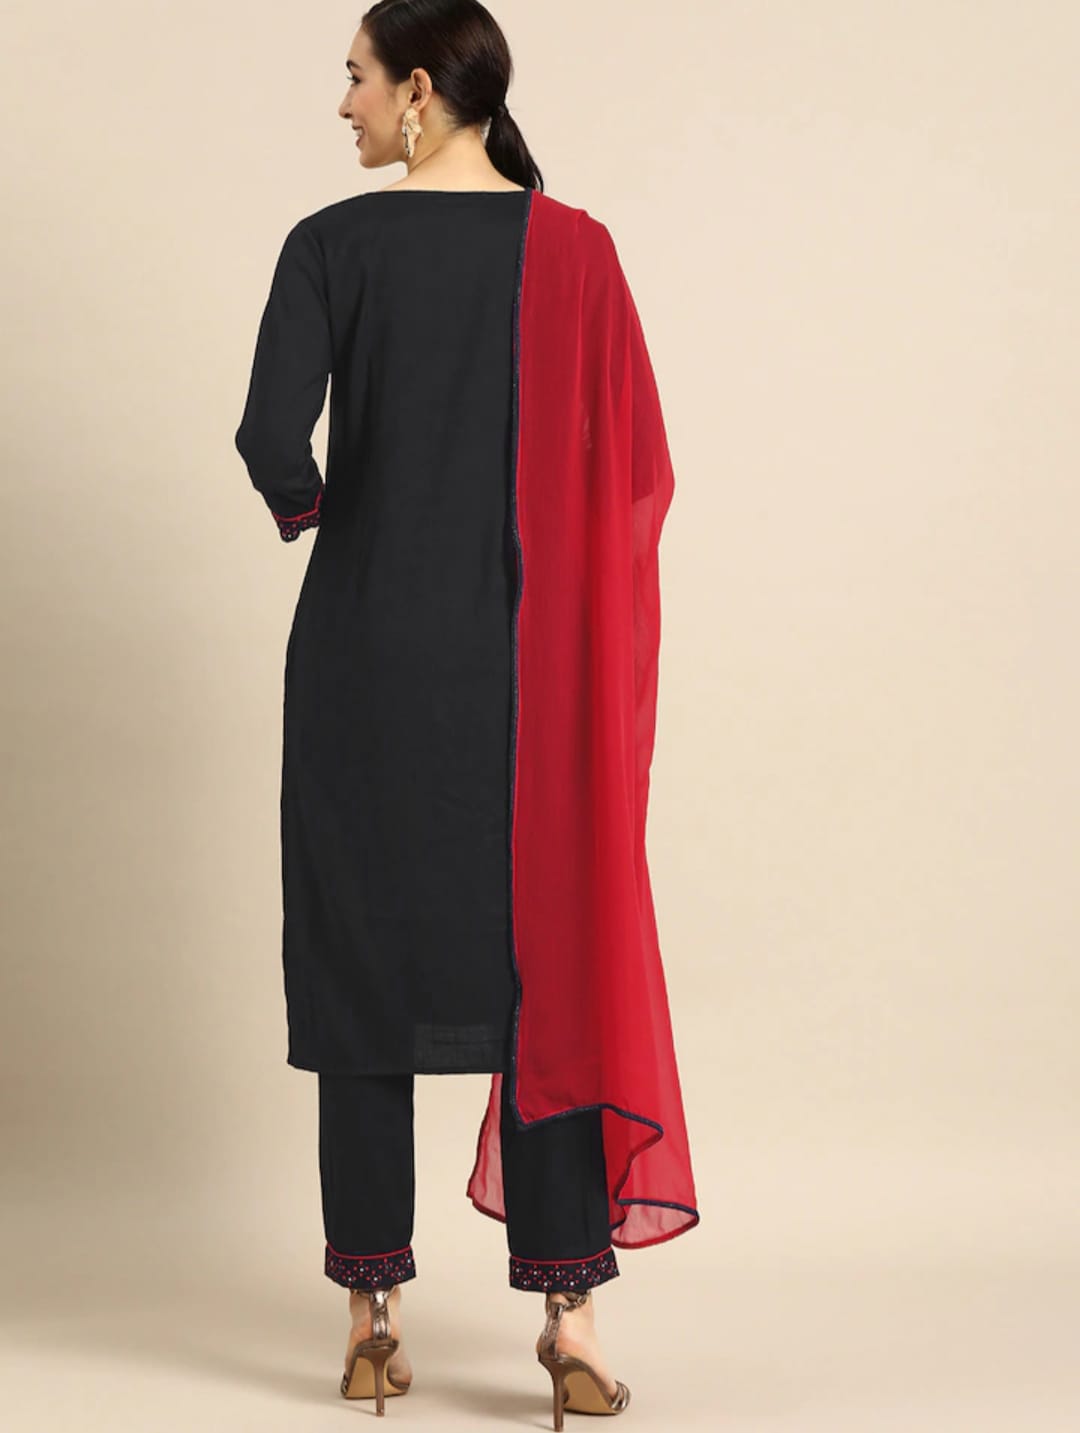 Women's Black Embroidery Cotton Kurta Set Collection - Dwija Fashion